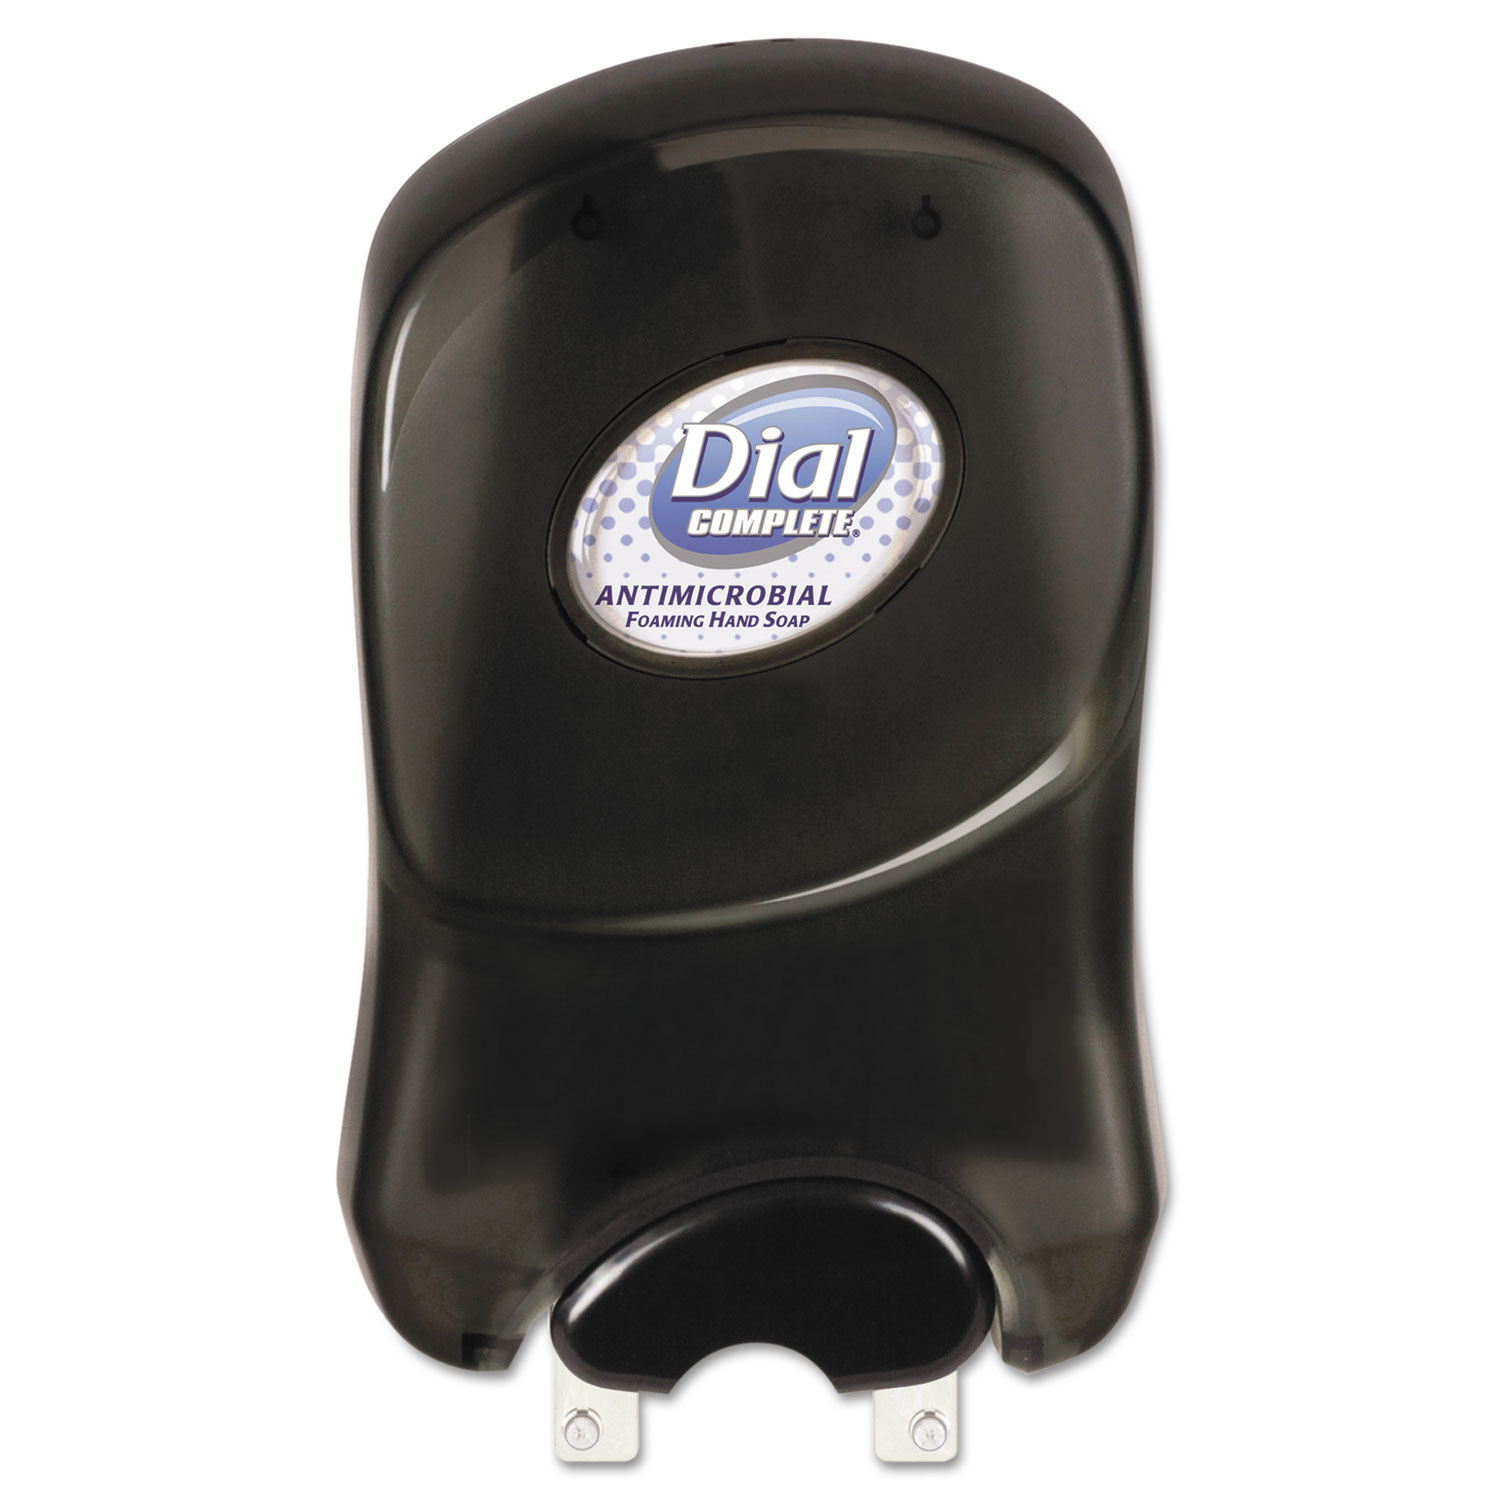  Dial Professional 1700005028 Duo Manual Soap Dispenser, 1250 mL, 7.25 x 3.88 x 11.75, Smoke (DIA05028) 